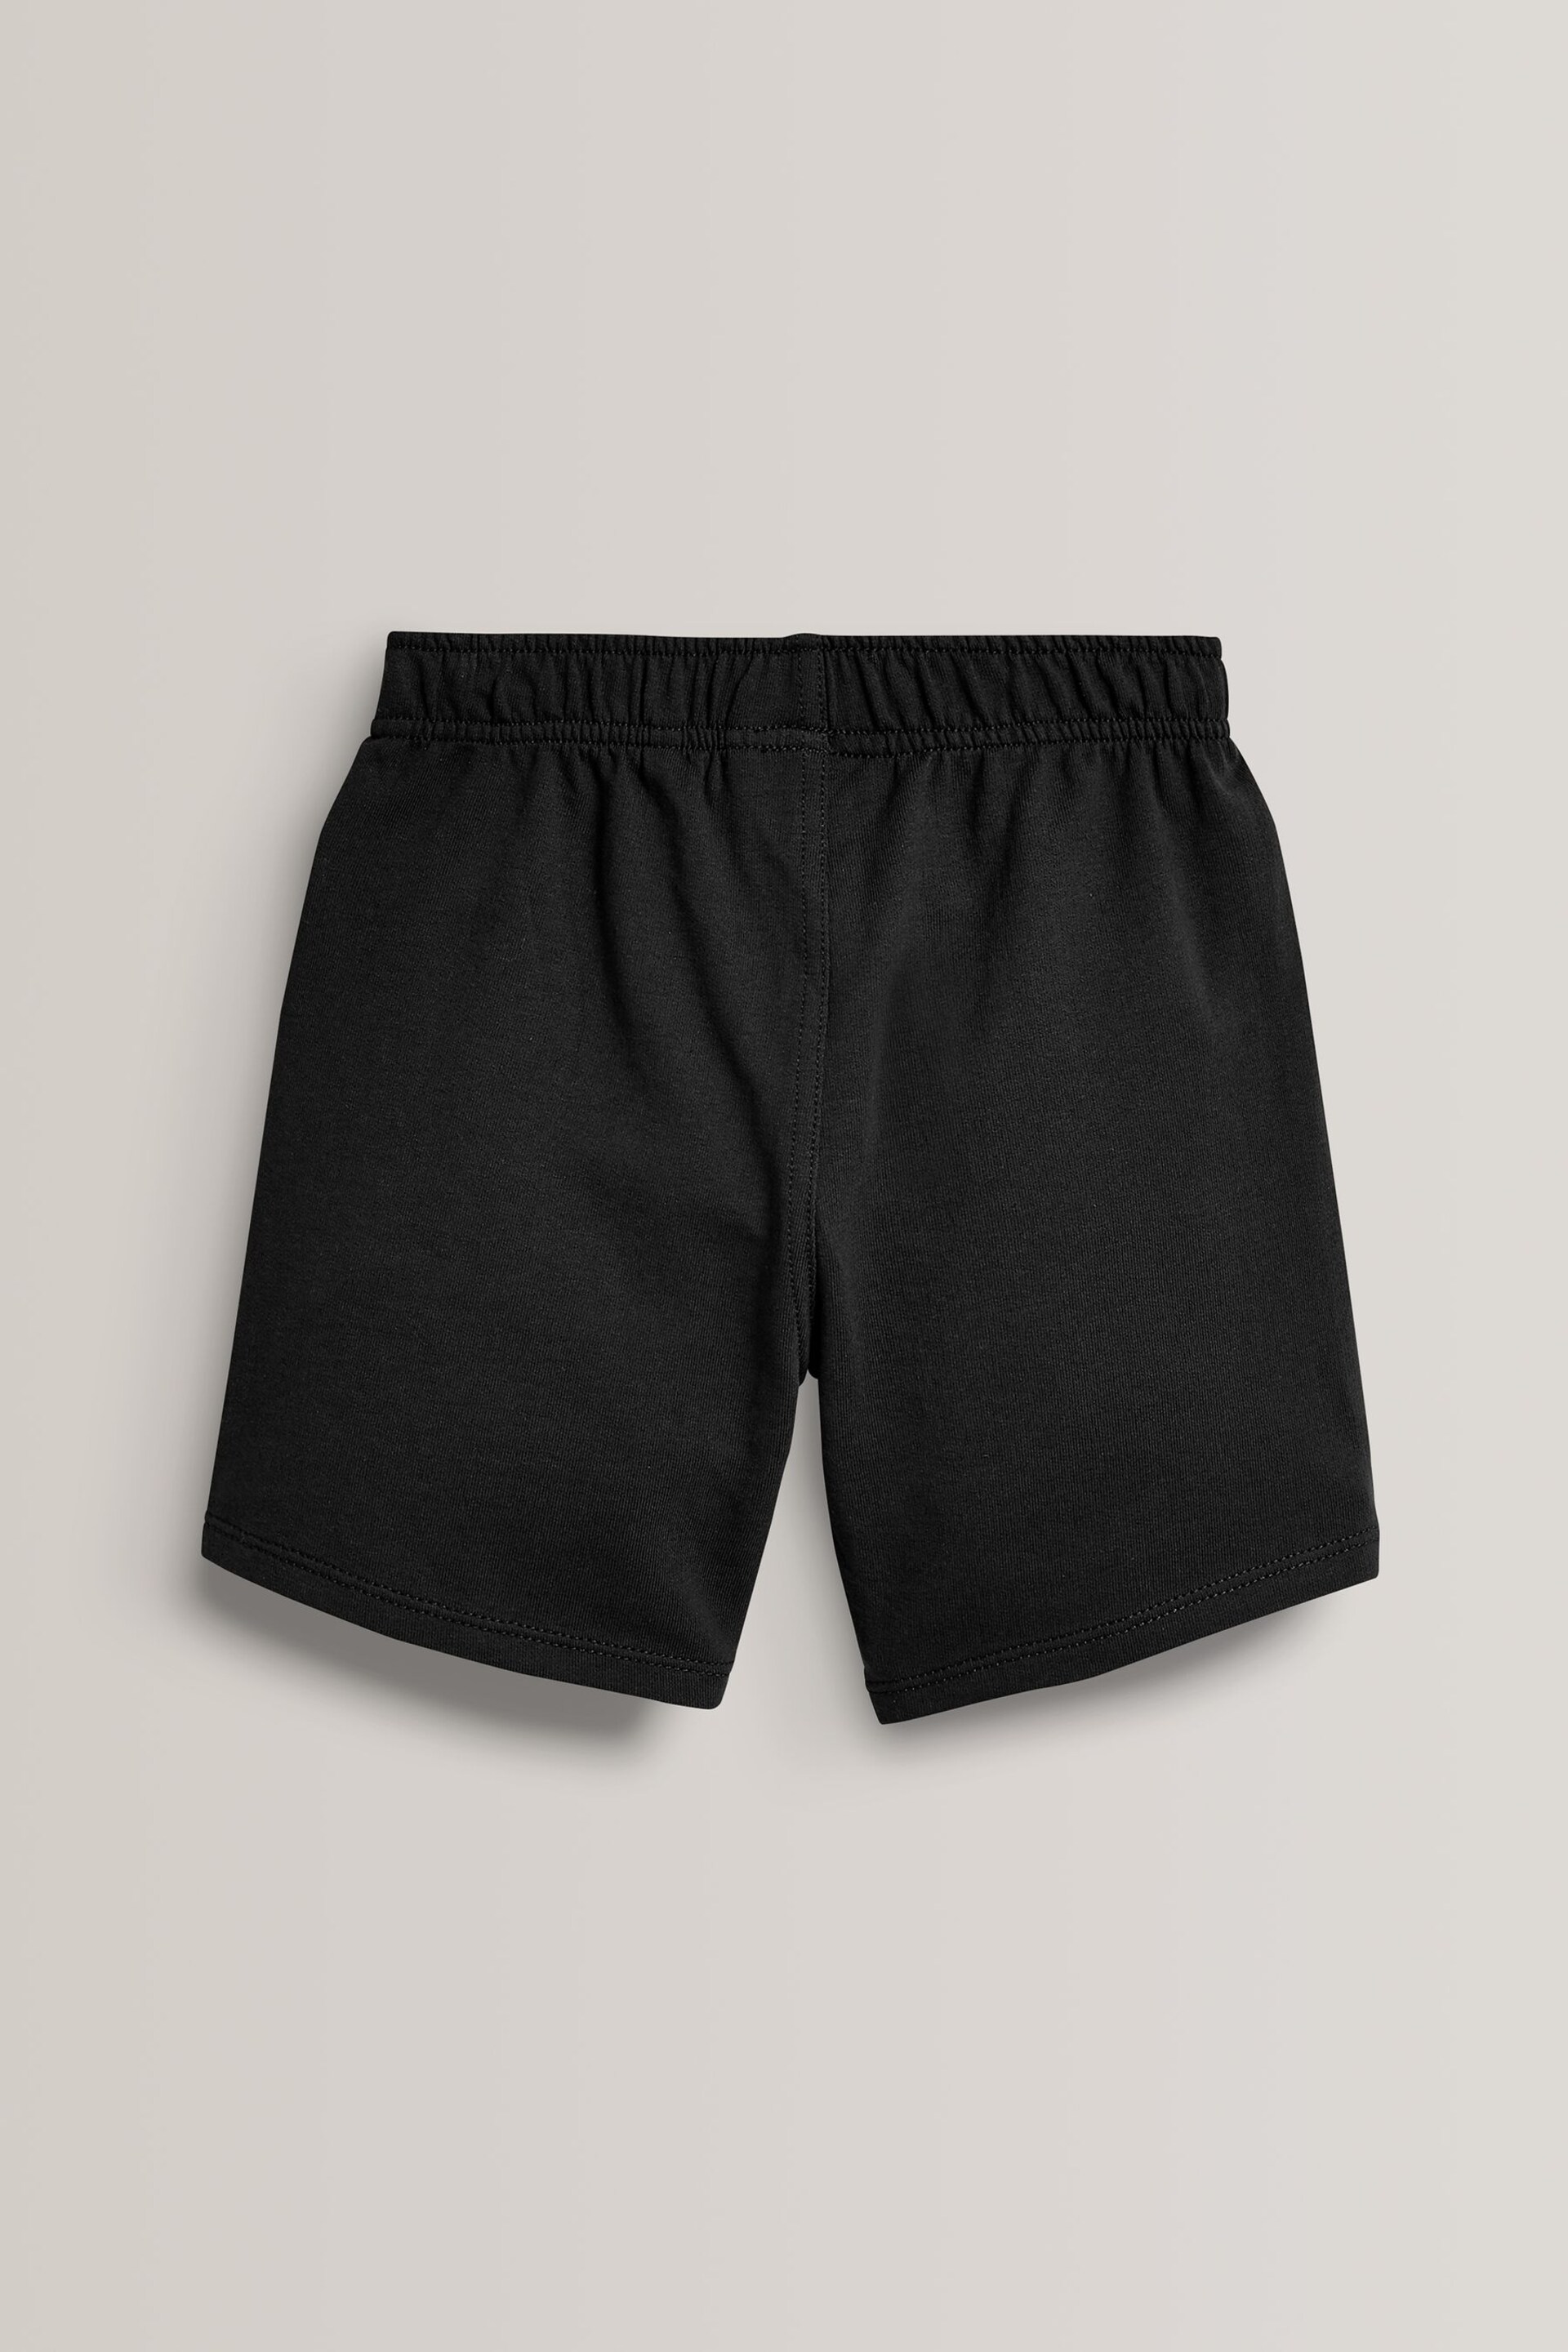 Black Jersey School Shorts (3-16yrs) - Image 2 of 3